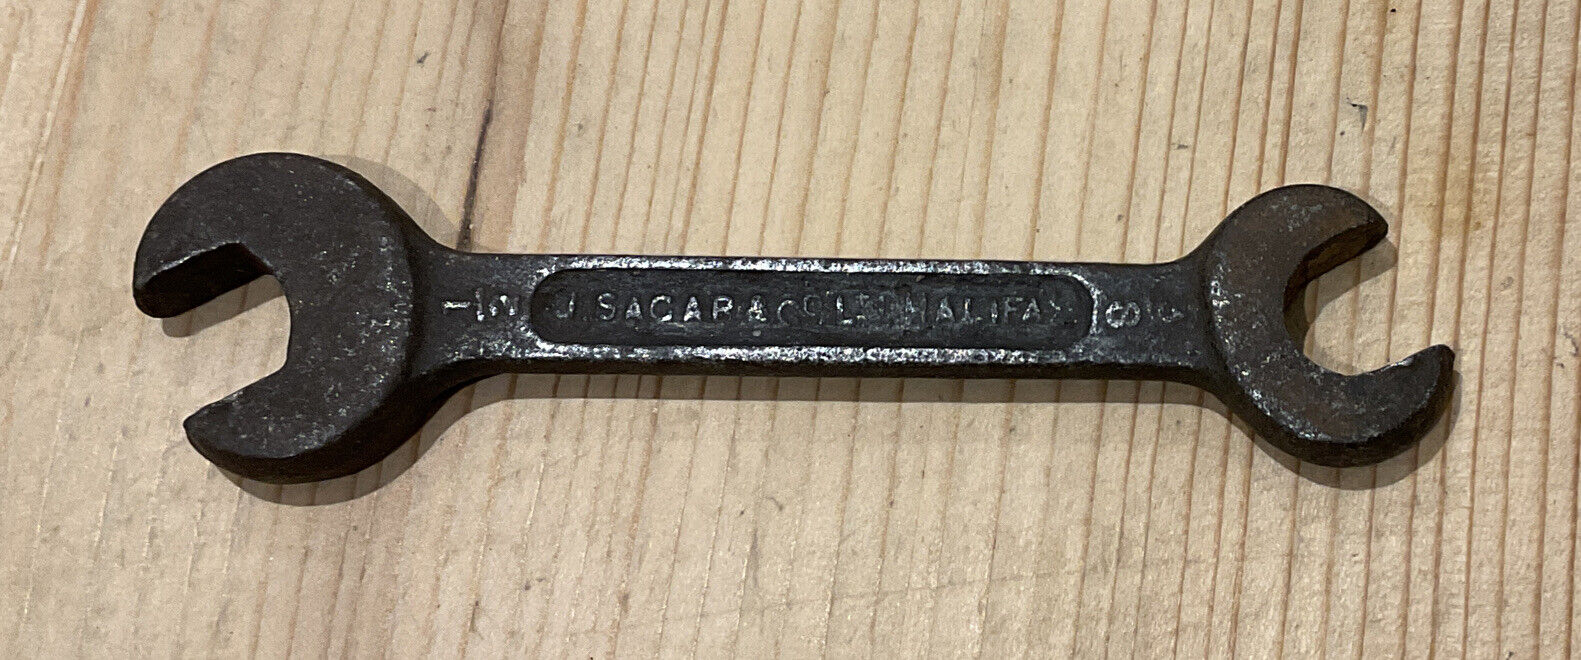 J Sagar Halifax Spanner Wrench woodworking Machinery Tool 1/2 3/8 Rare Vintage